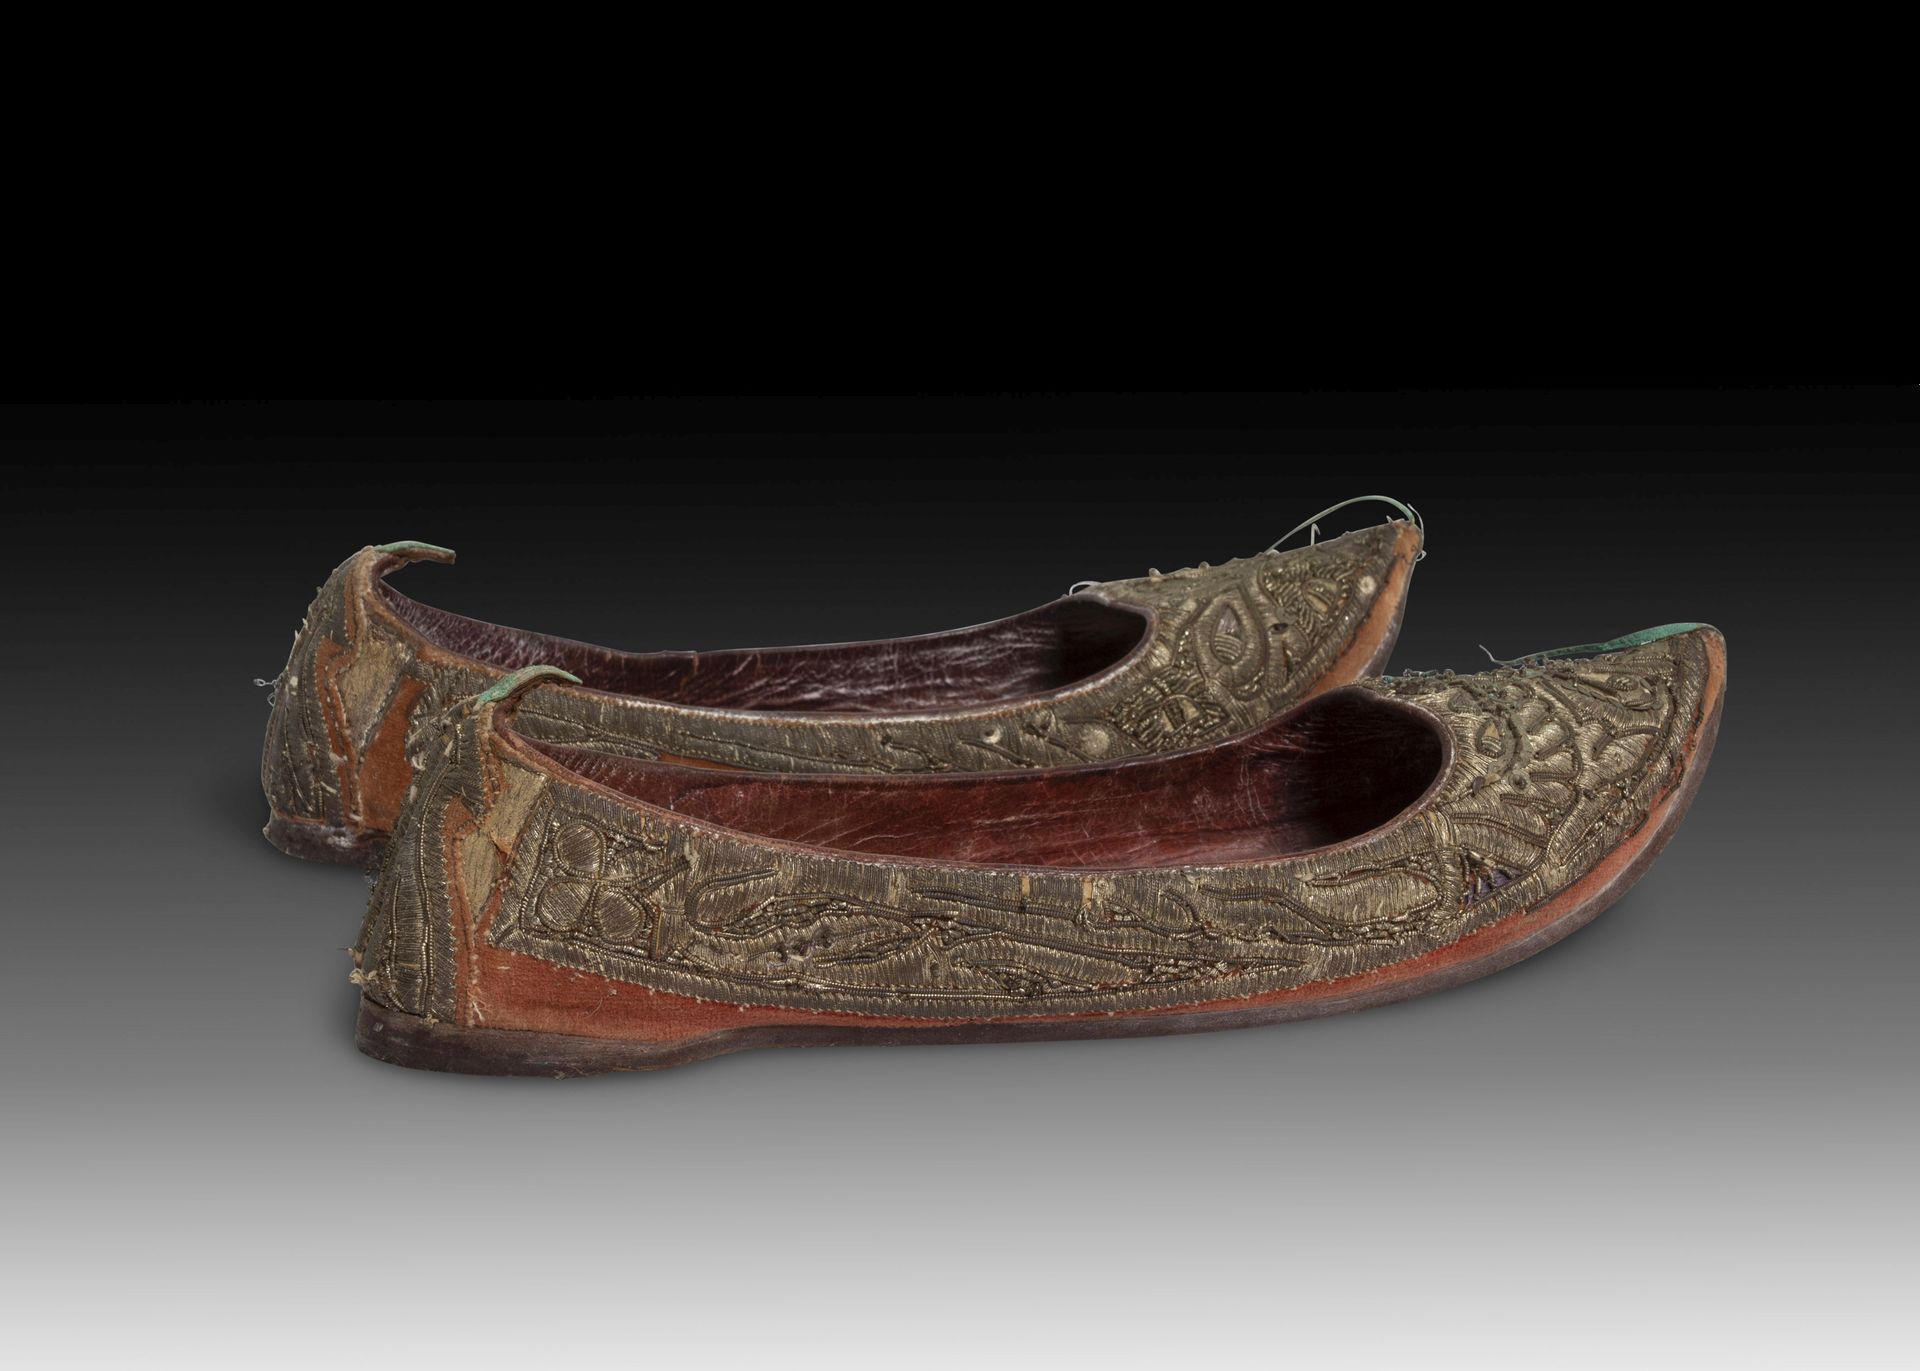 PAIR OF OTTOMAN SHOES, 19TH CENTURY 一双OTOMAN鞋，19世纪
 
 每只鞋的长度约为：29厘米